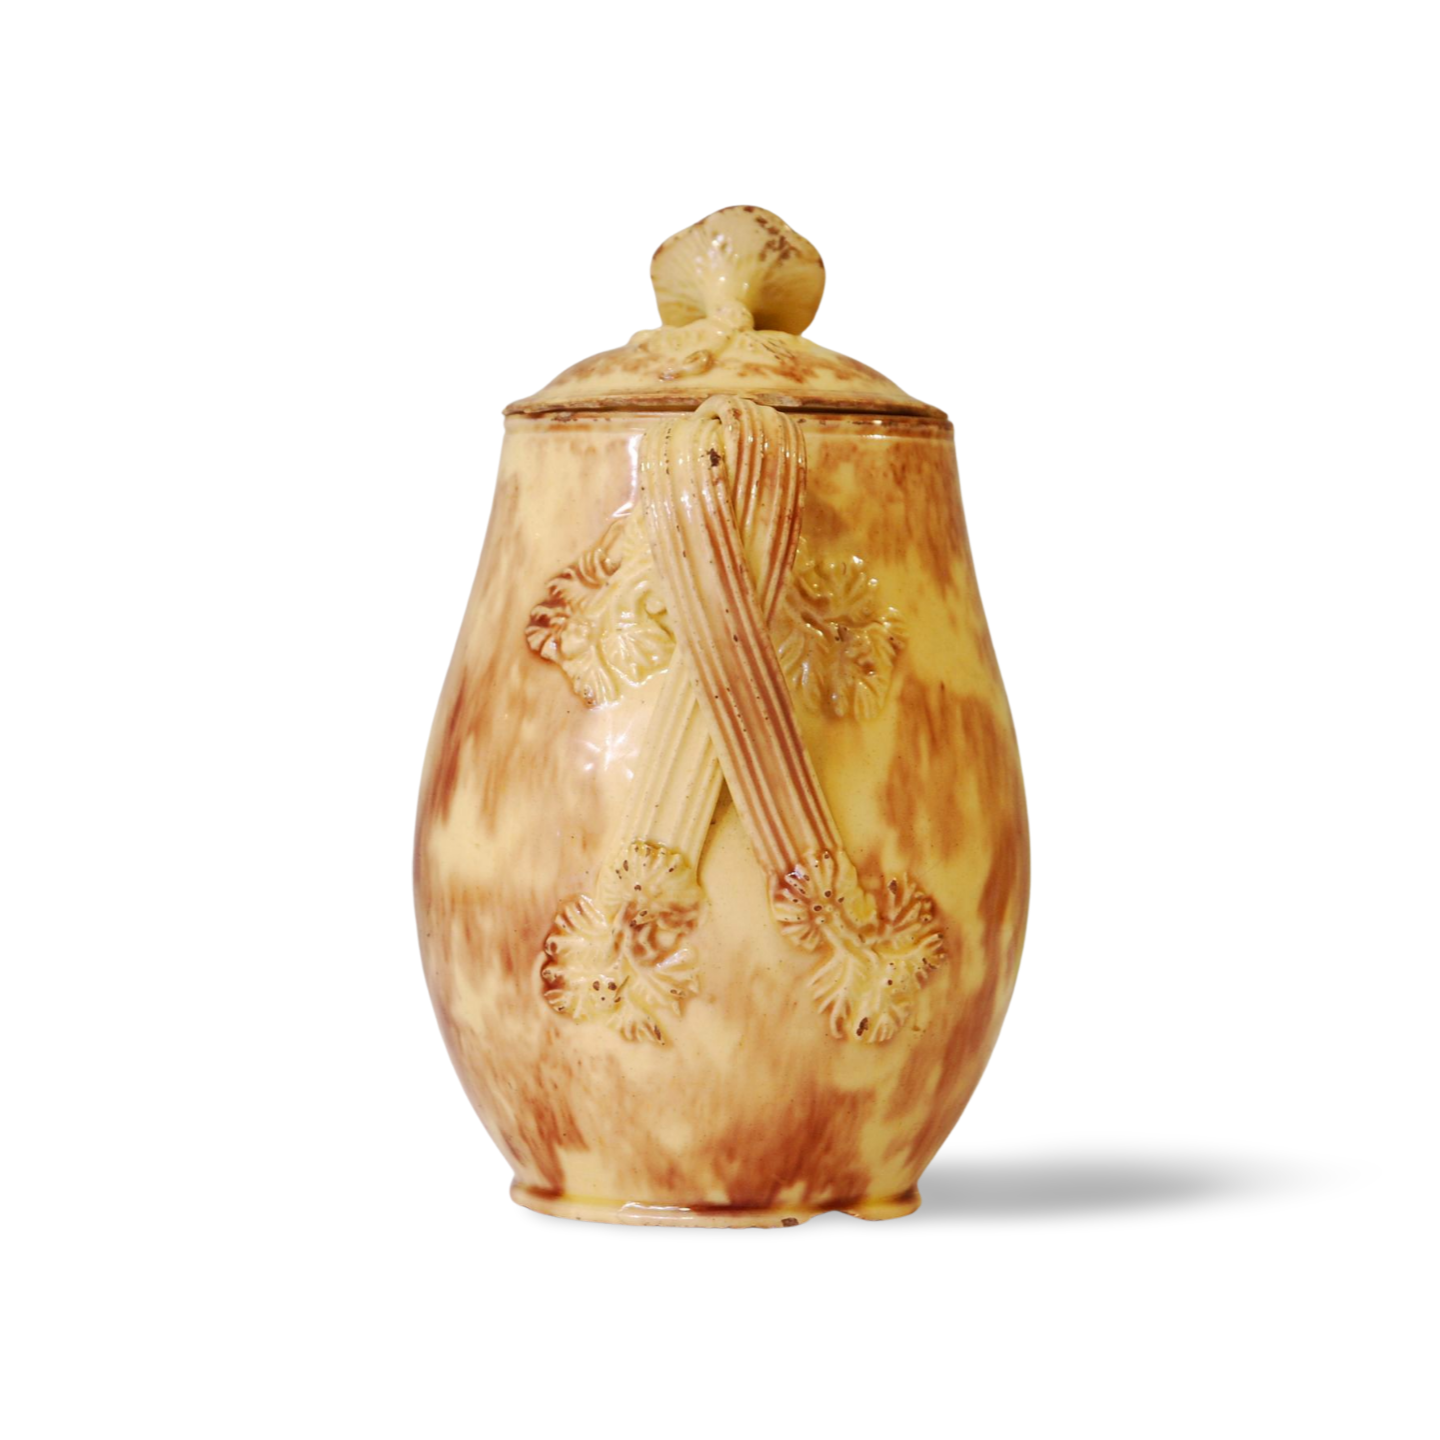 Whieldonware type lidded jug